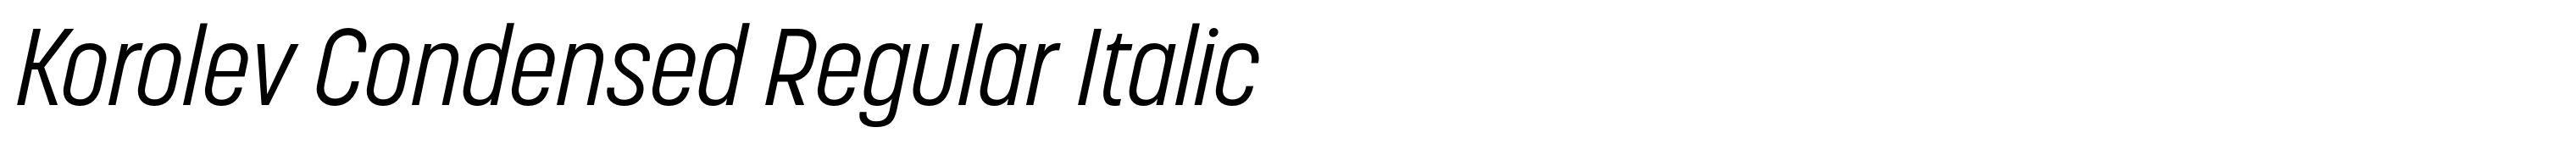 Korolev Condensed Regular Italic